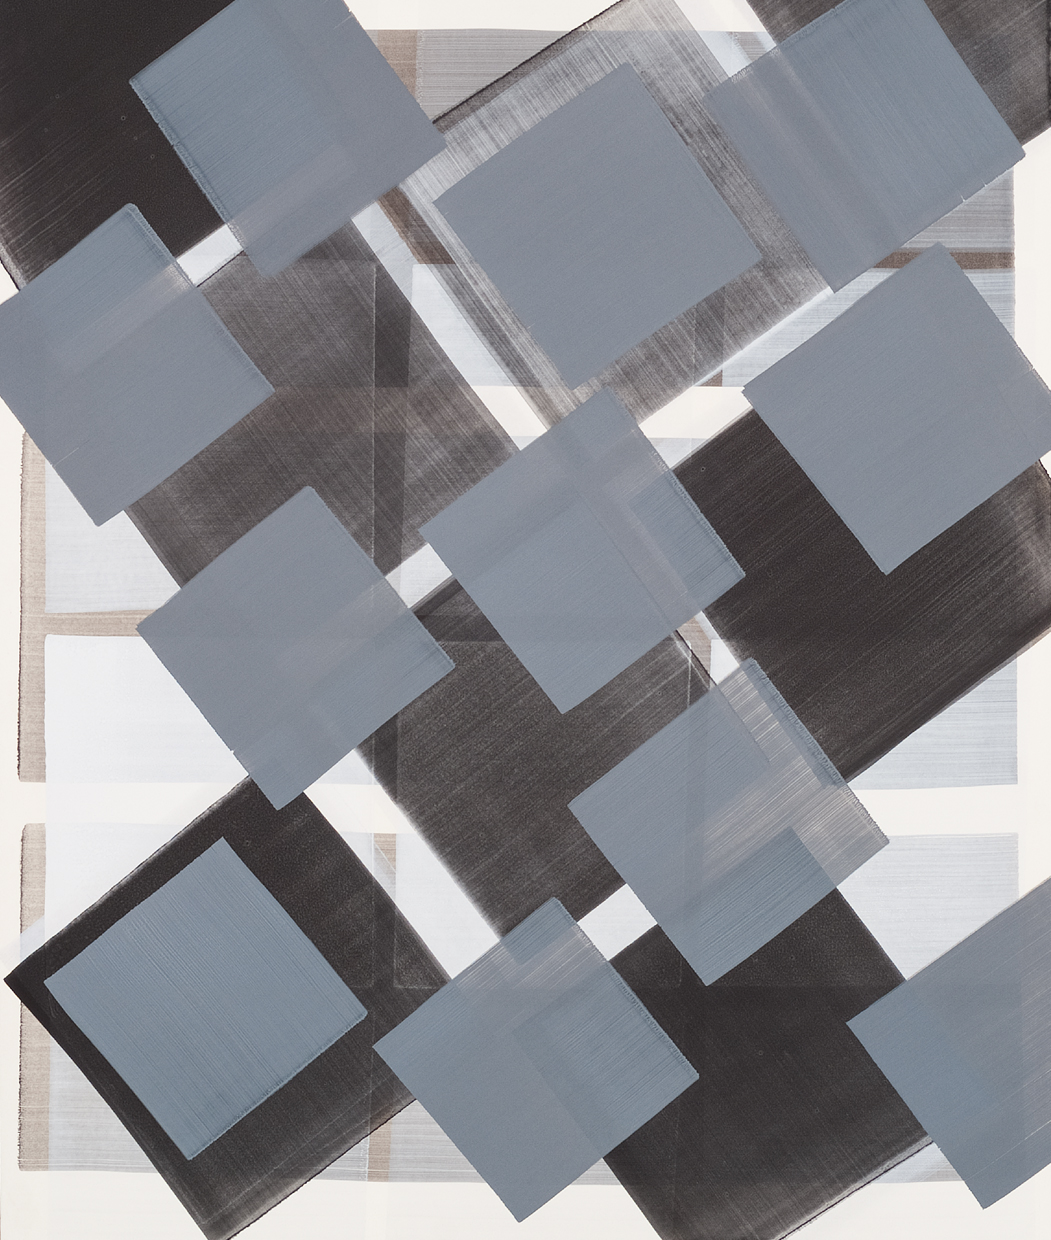 Nikola Dimitrov, Fuge, 2016, Pigment, Bindemittel, Lösungsmittel auf Bütten, je 105,5 x 89 cm